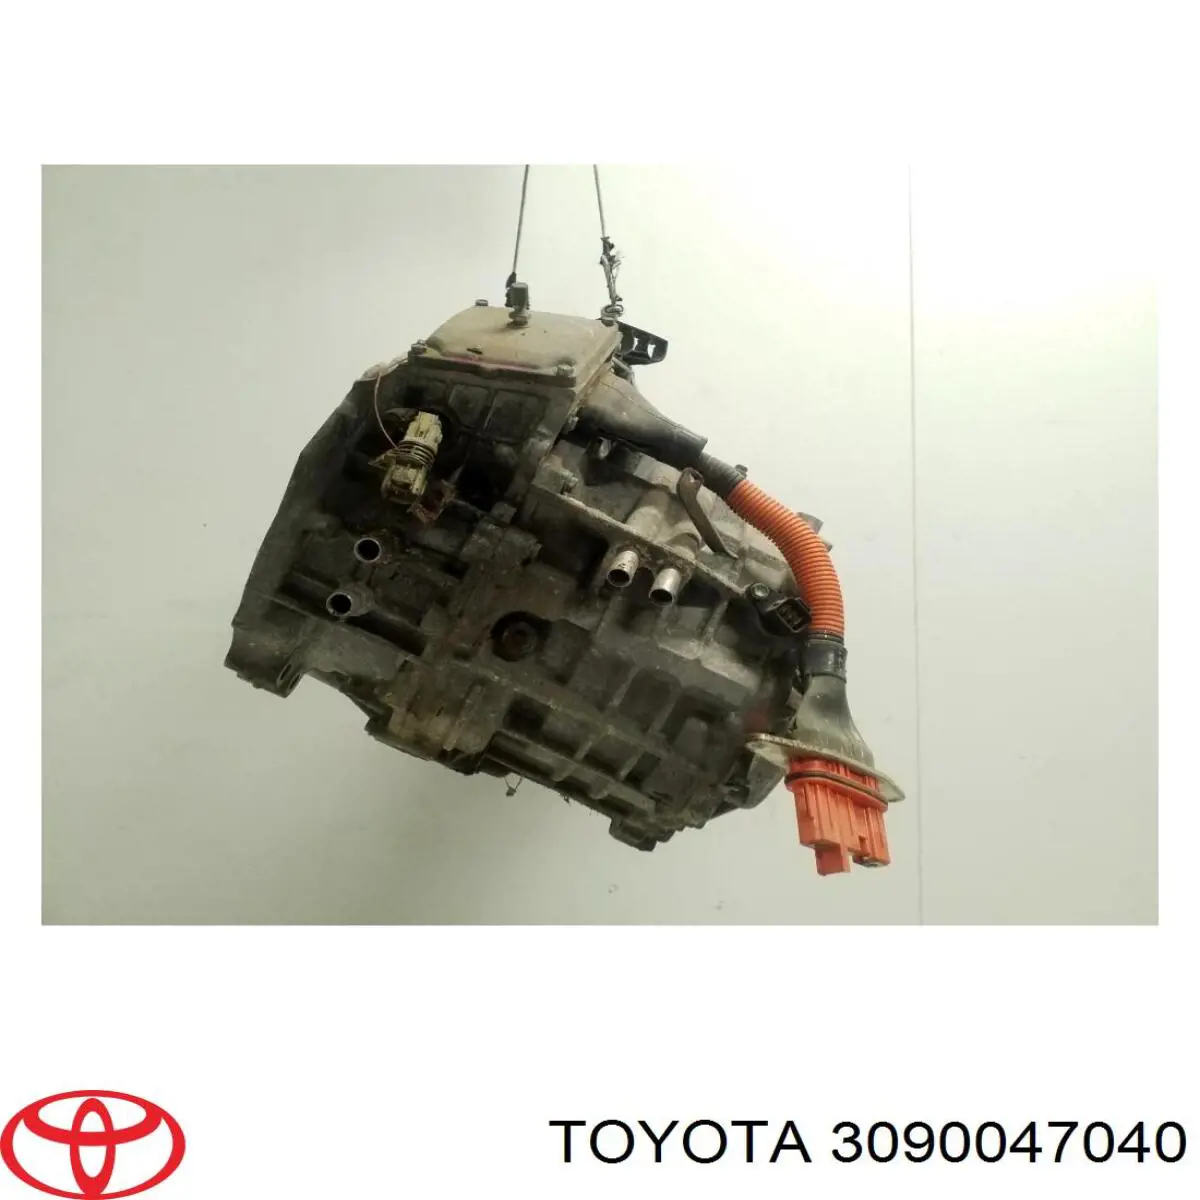 Transmisión automática completa para Toyota Prius (NHW20)